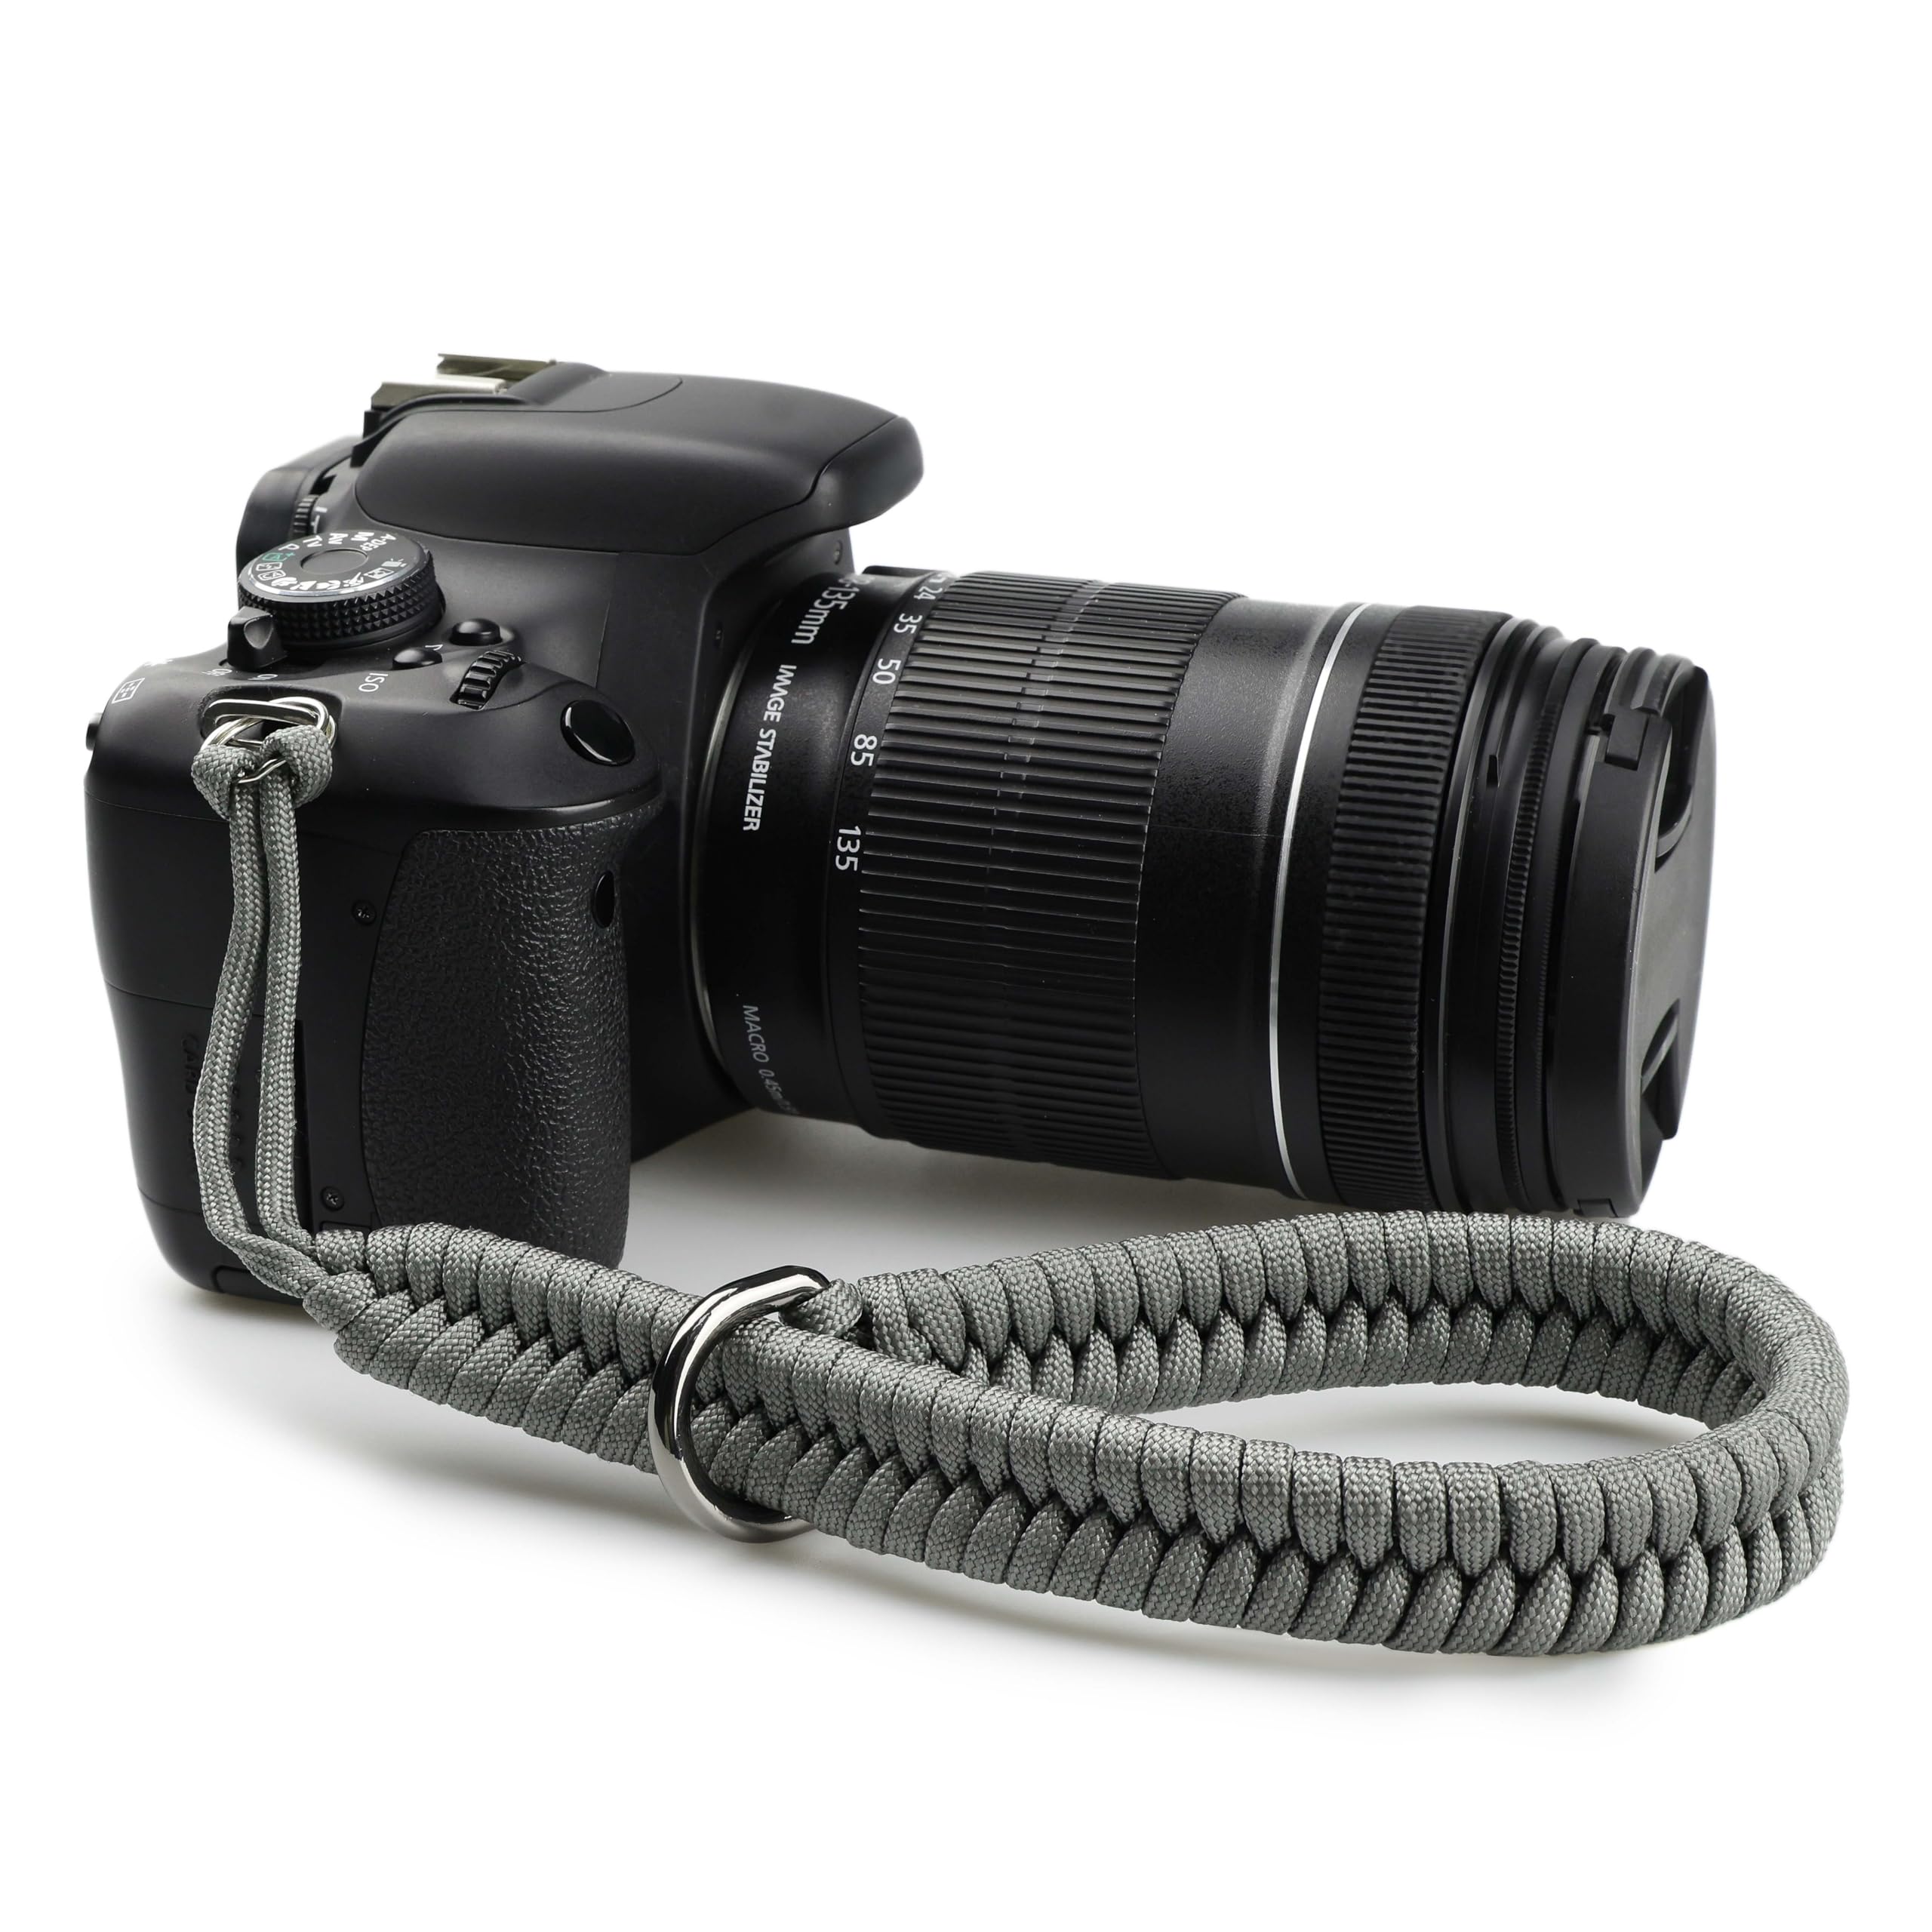 FIT [SUNYA] カメラリストストラップ、 550パラコード 編みハンドメイドストラップ クイック着脱 メタルリング付き携帯用アクセサリー ほとんどの手首サイズにフィット、グレー